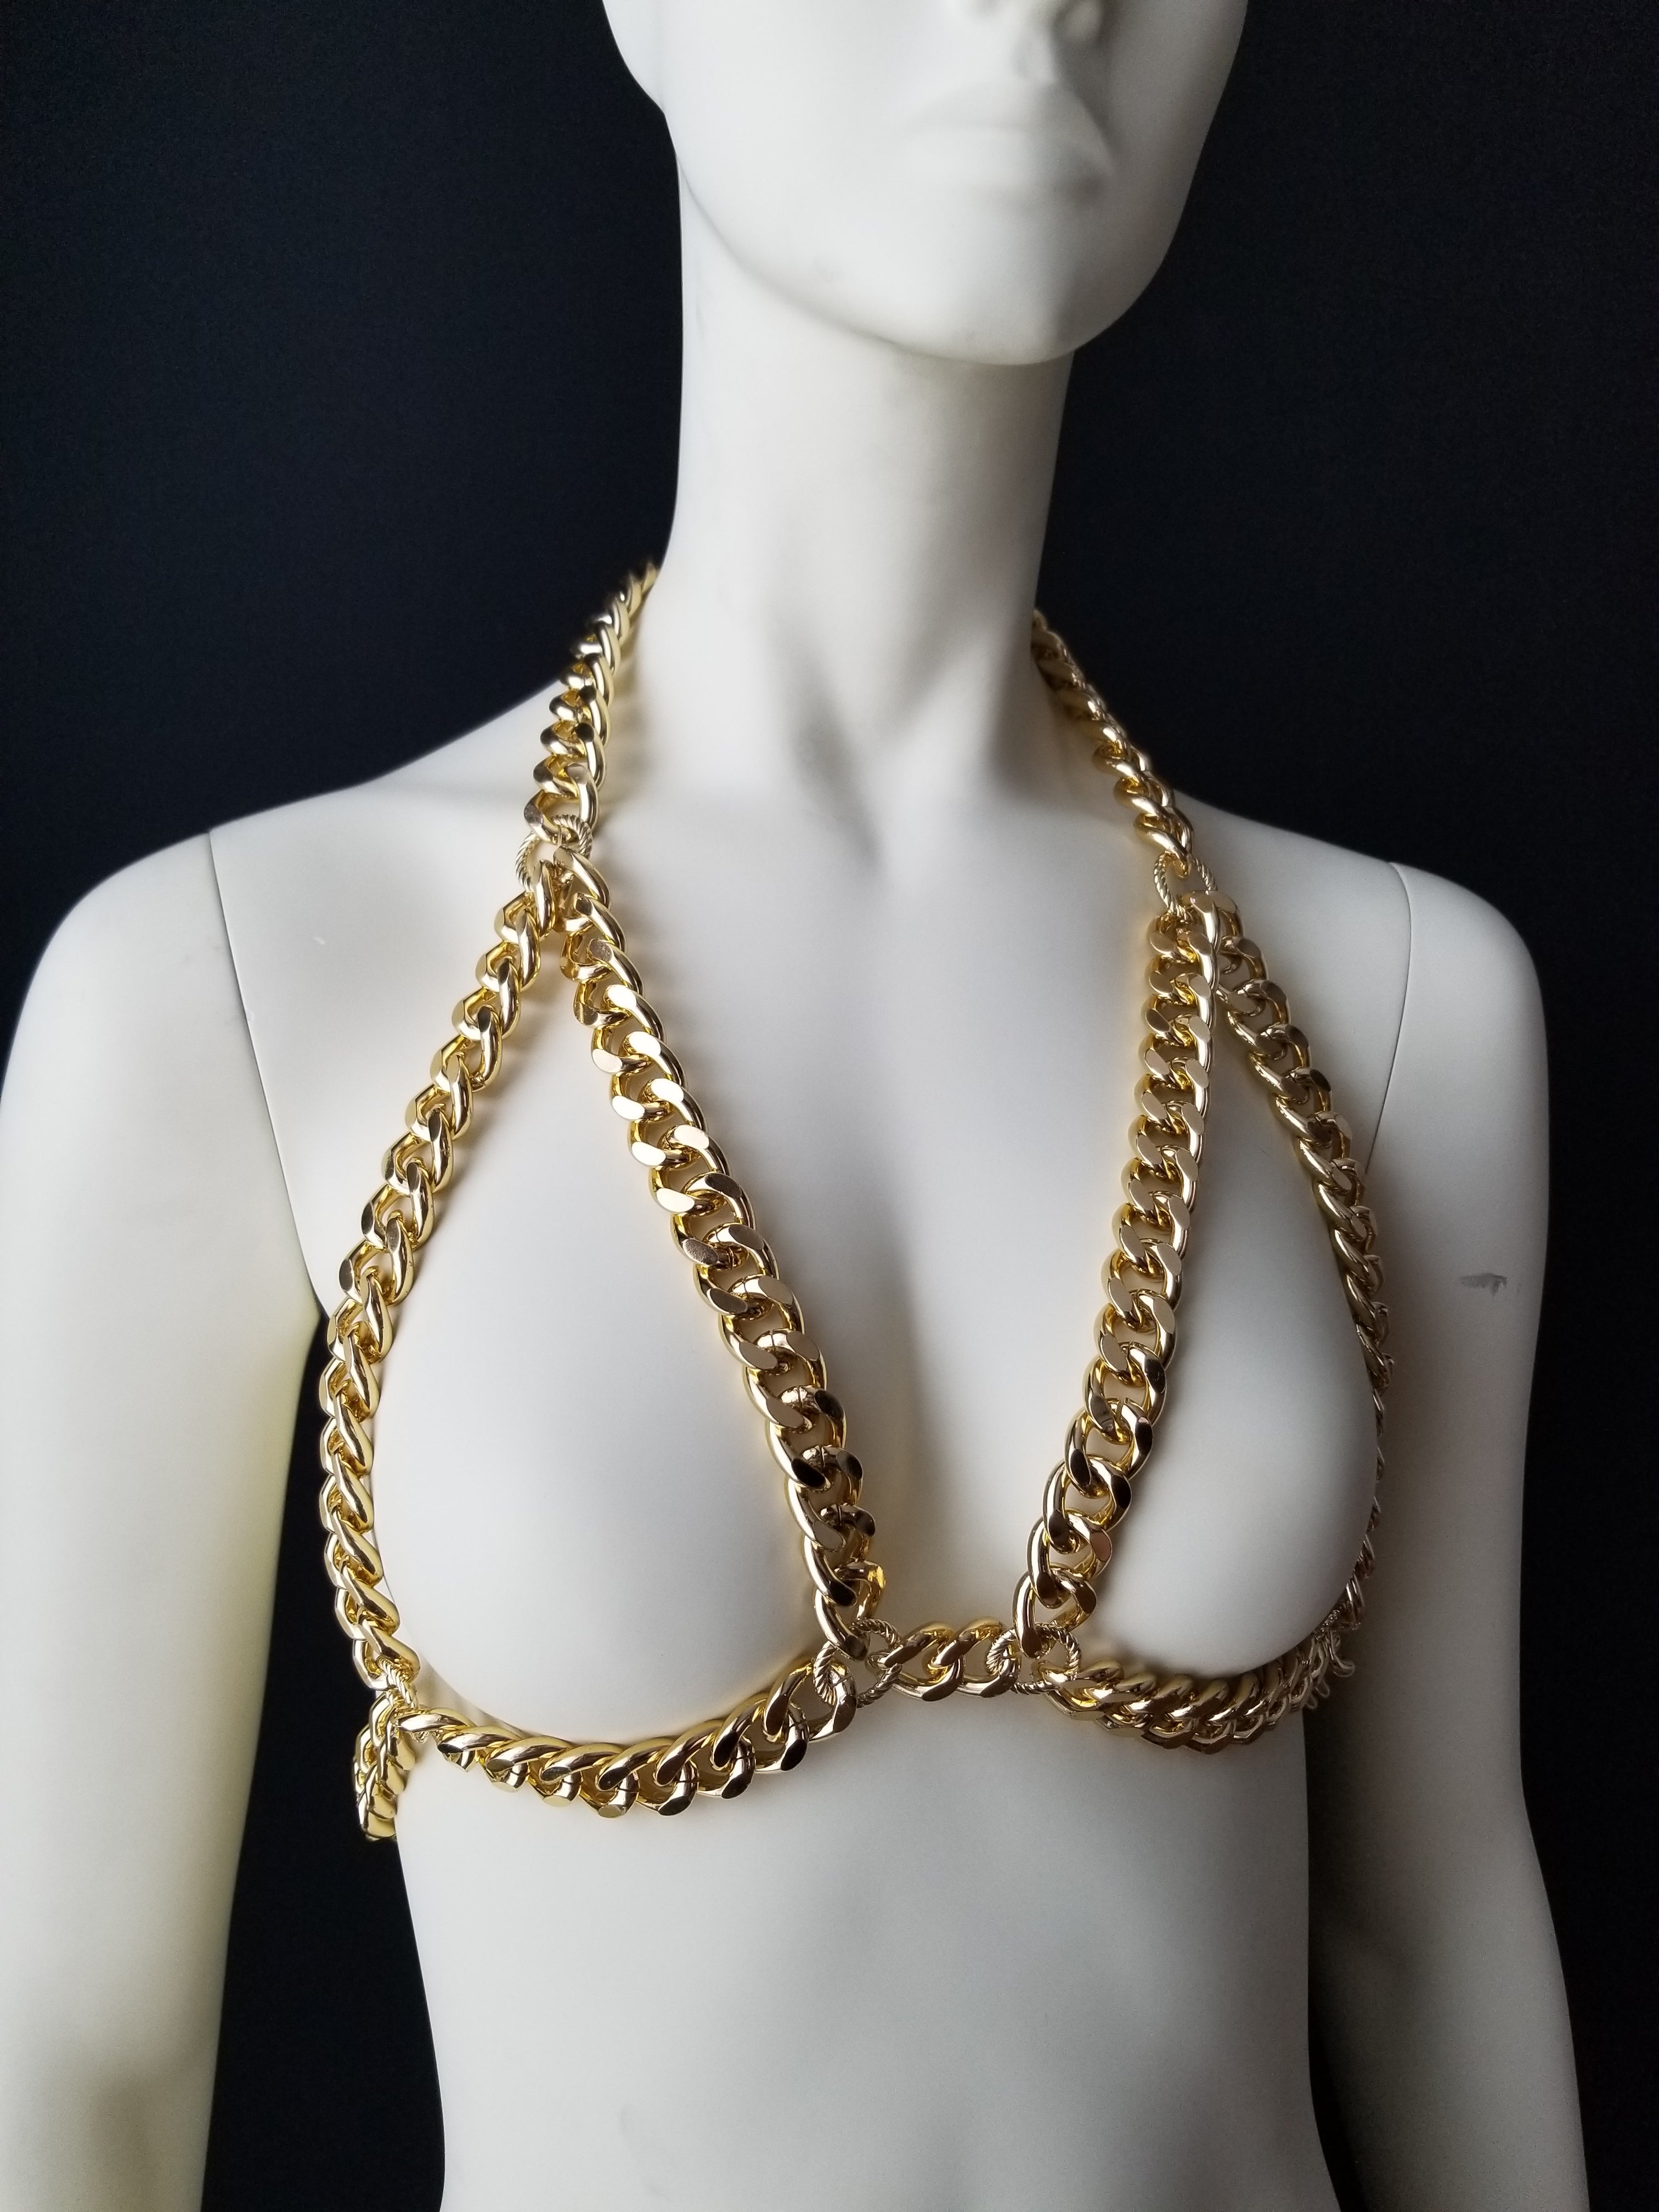 Buy FemNmas Golden Simple Bra Chain Jewelry for Girls & Women at